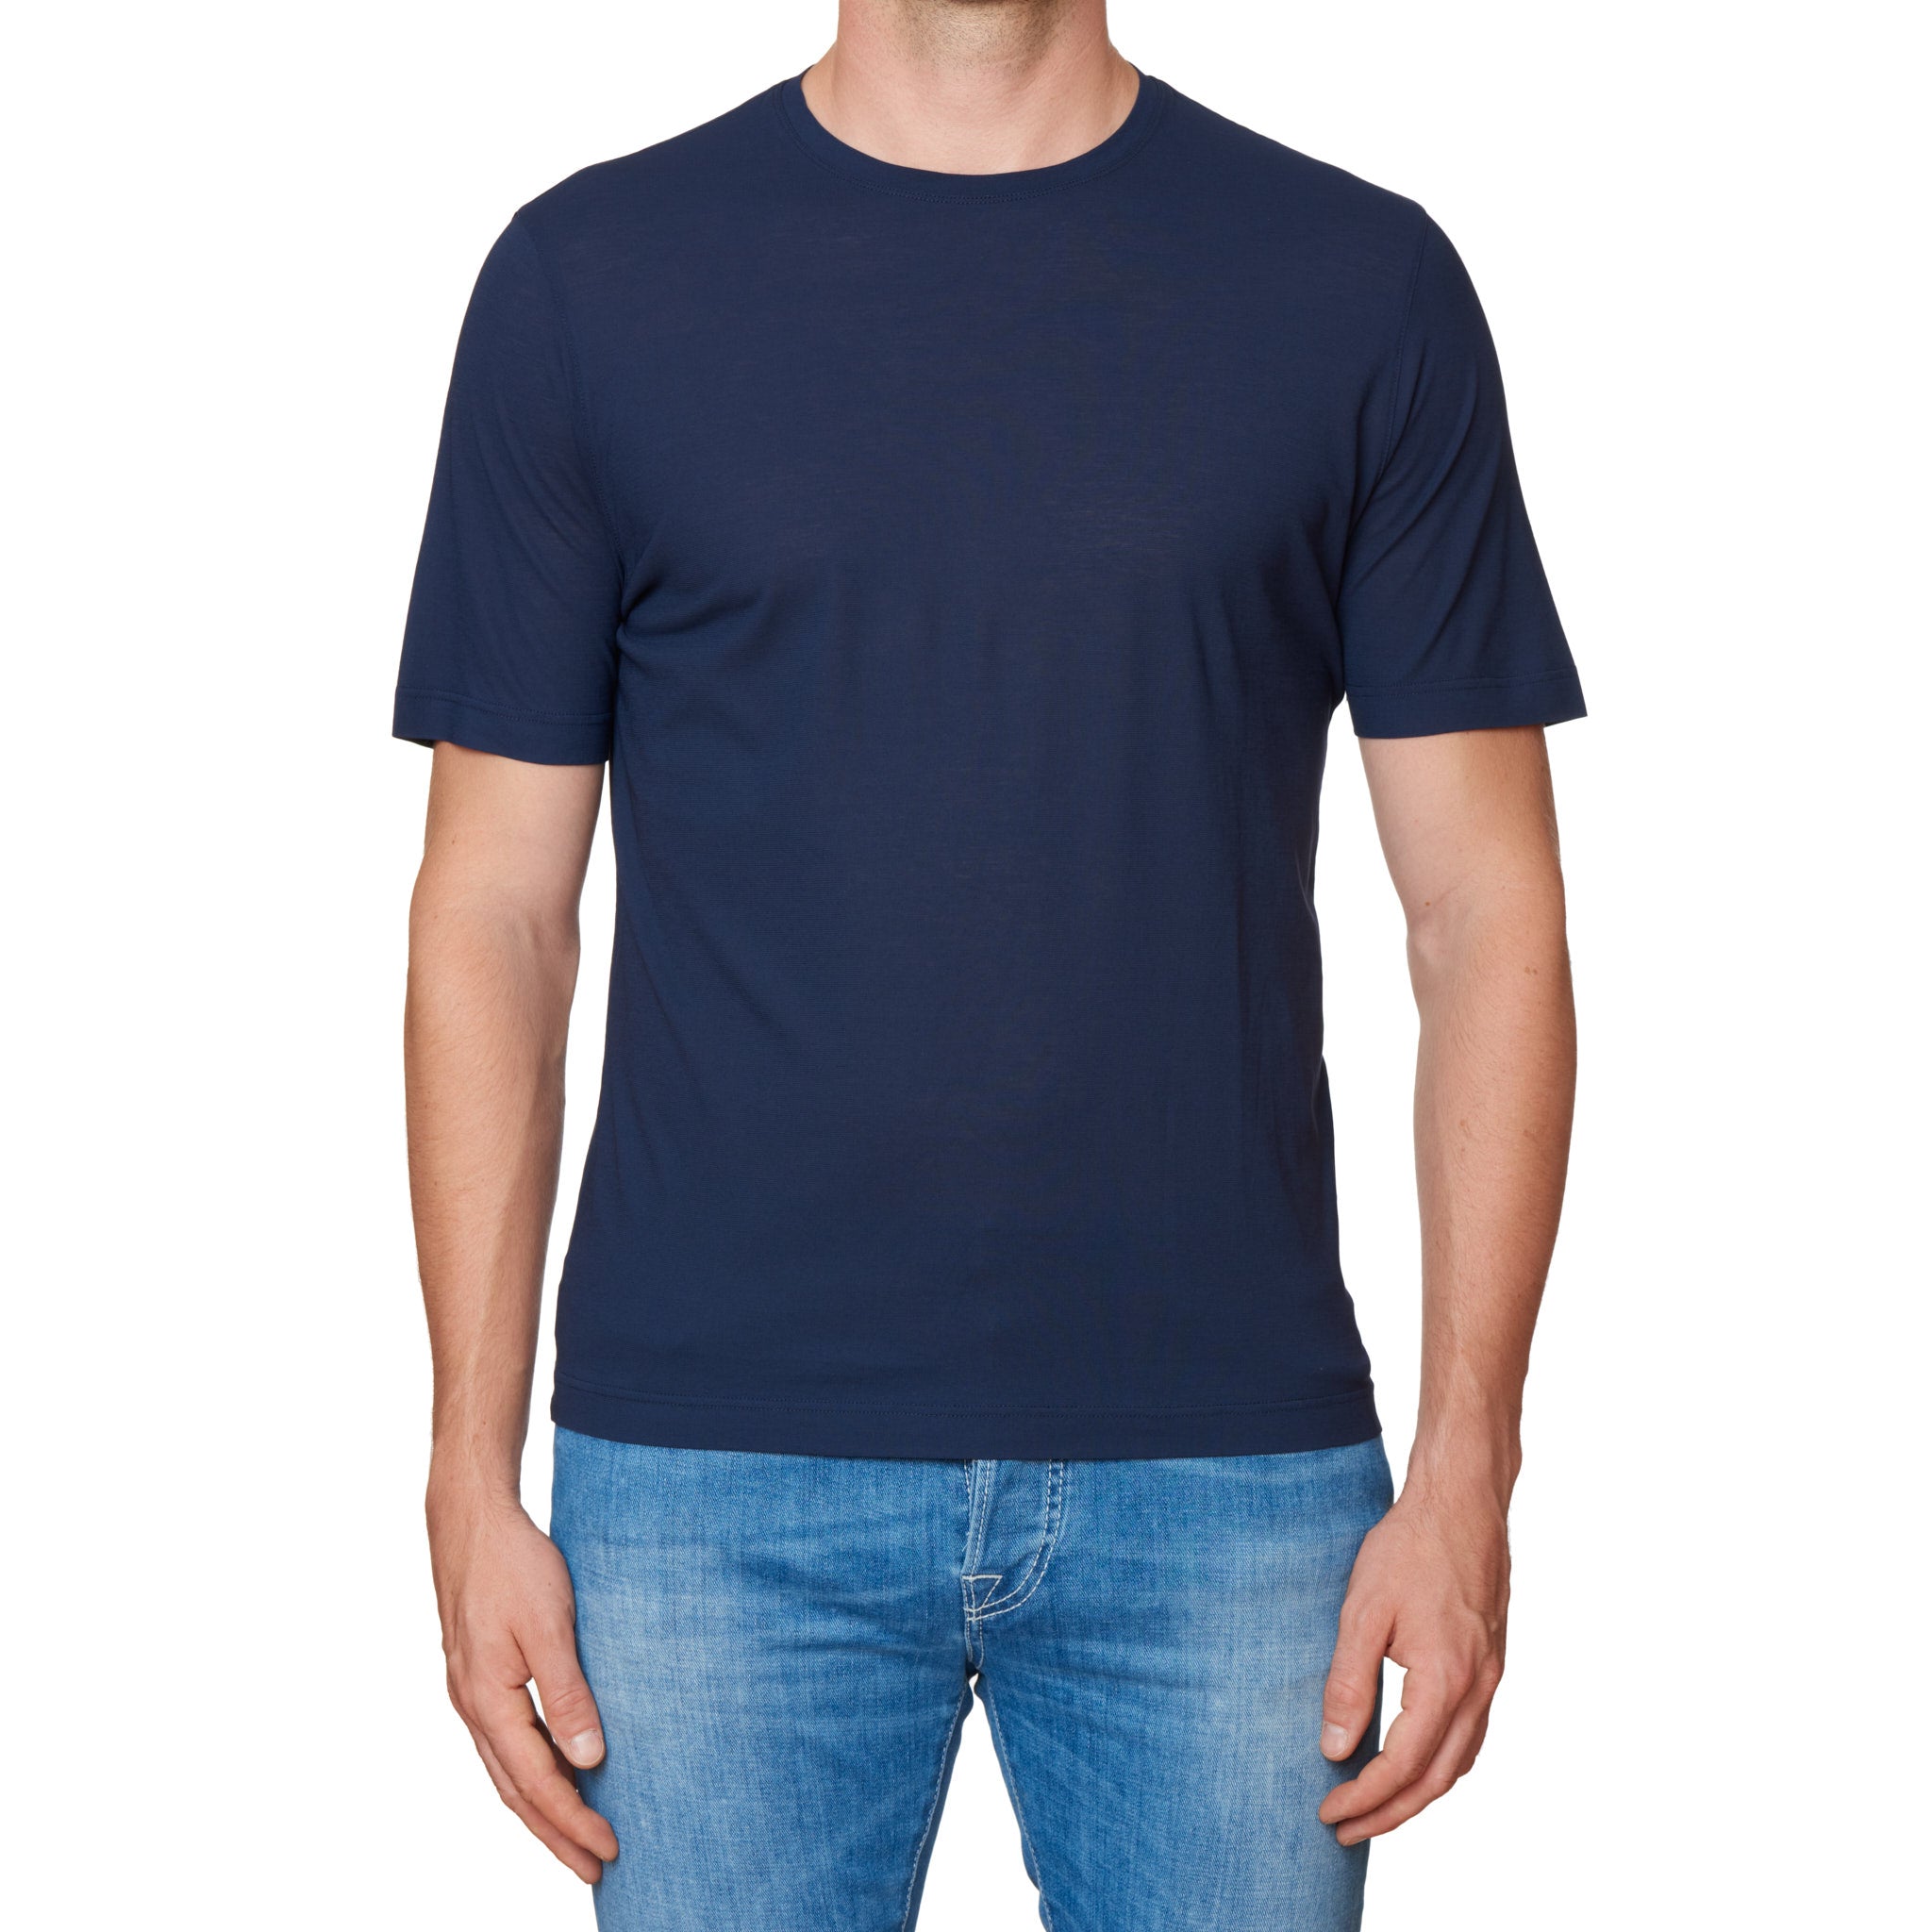 Kiton KIRED "Baciomc" Navy Blue Exclusive Crepe Cotton Short Sleeve T-Shirt KIRED